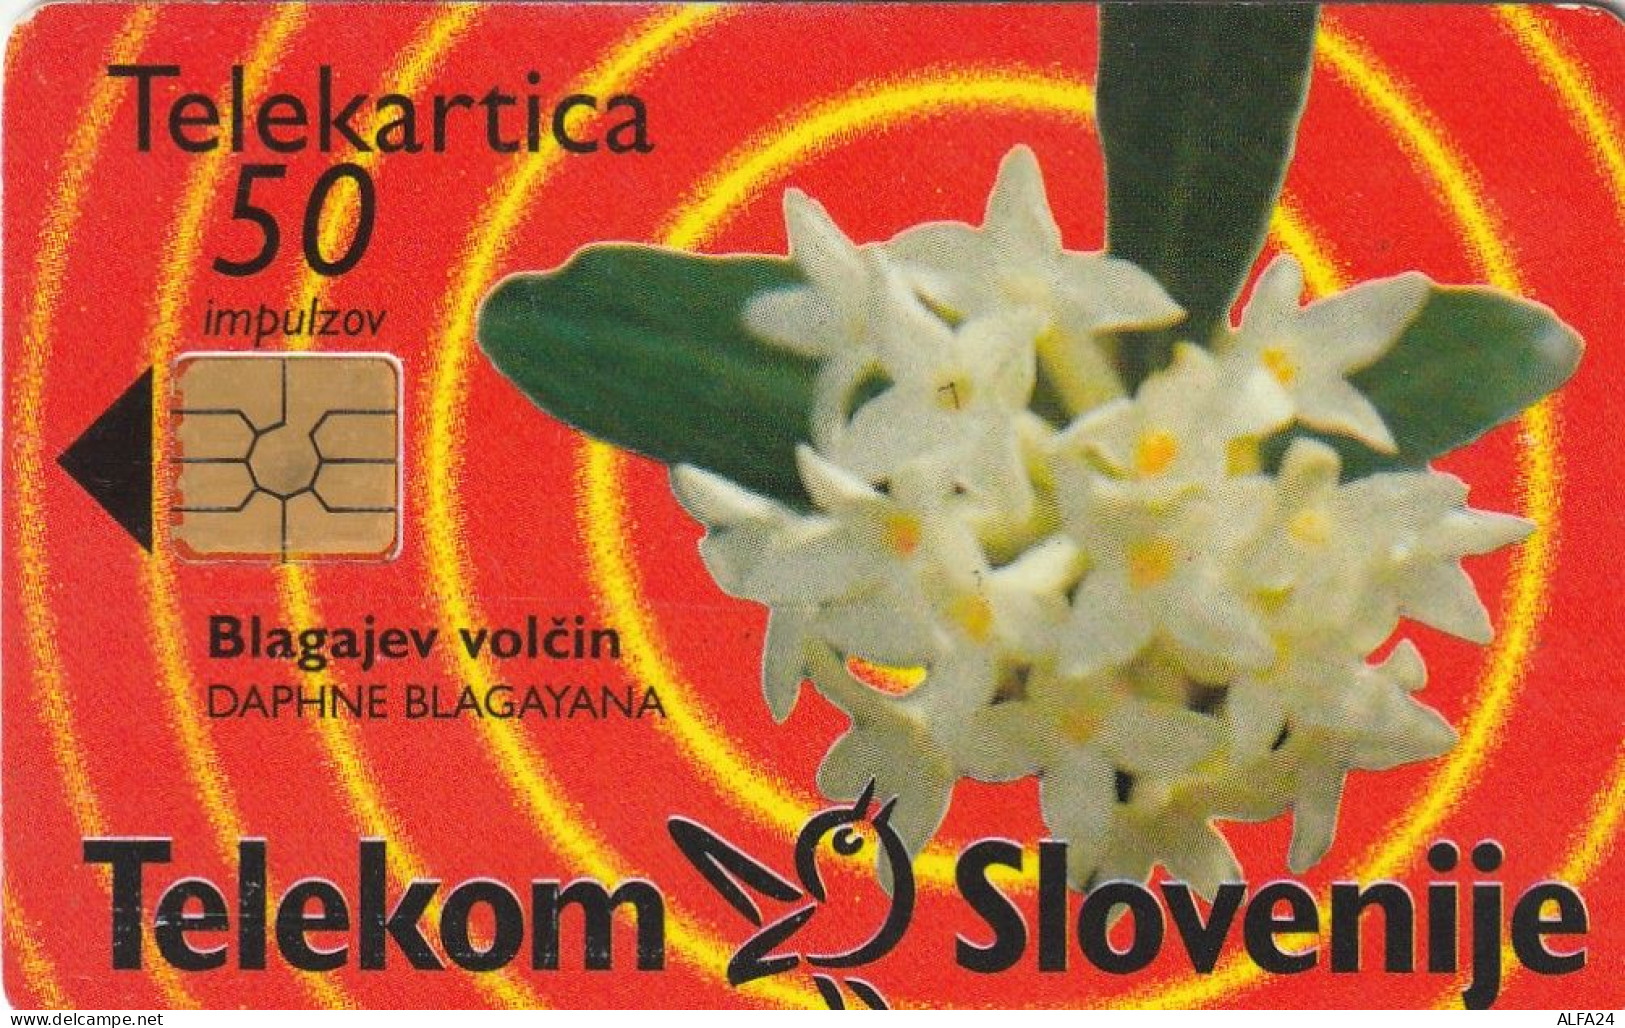 PHONE CARD SLOVENIA (E48.24.1 - Slowenien